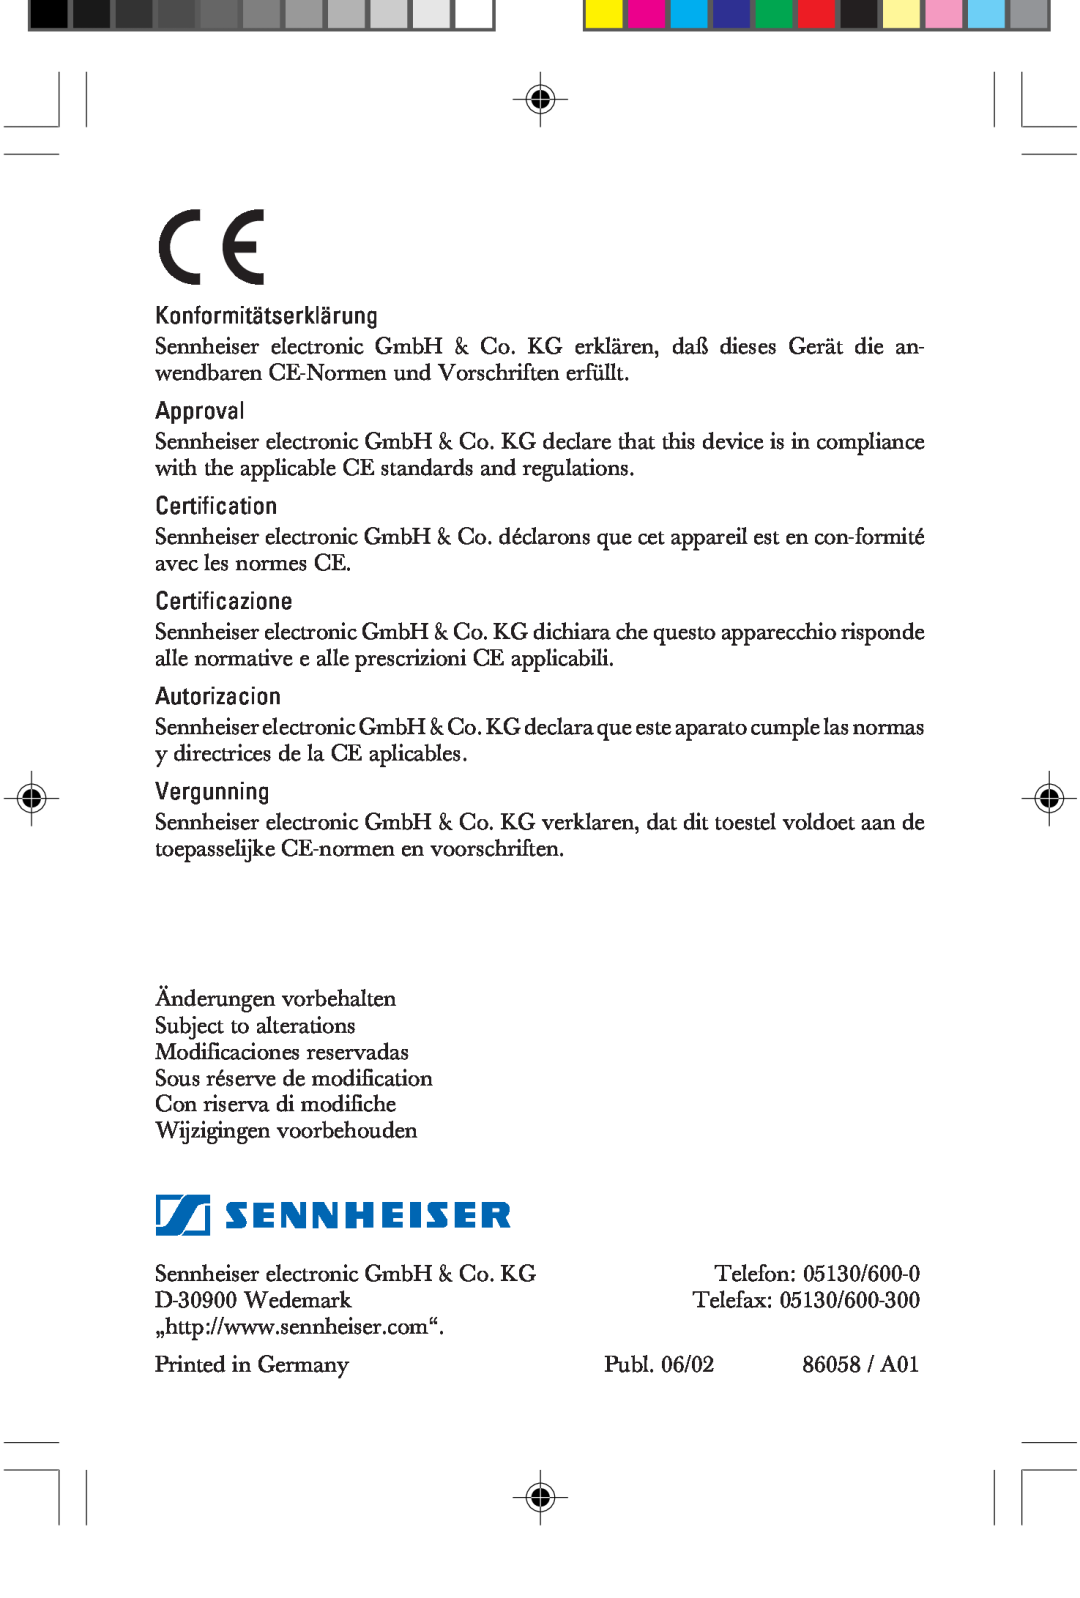 Sennheiser HME 25-KA-2 manual Konformitätserklärung, Approval, Certification, Certificazione, Autorizacion, Vergunning 